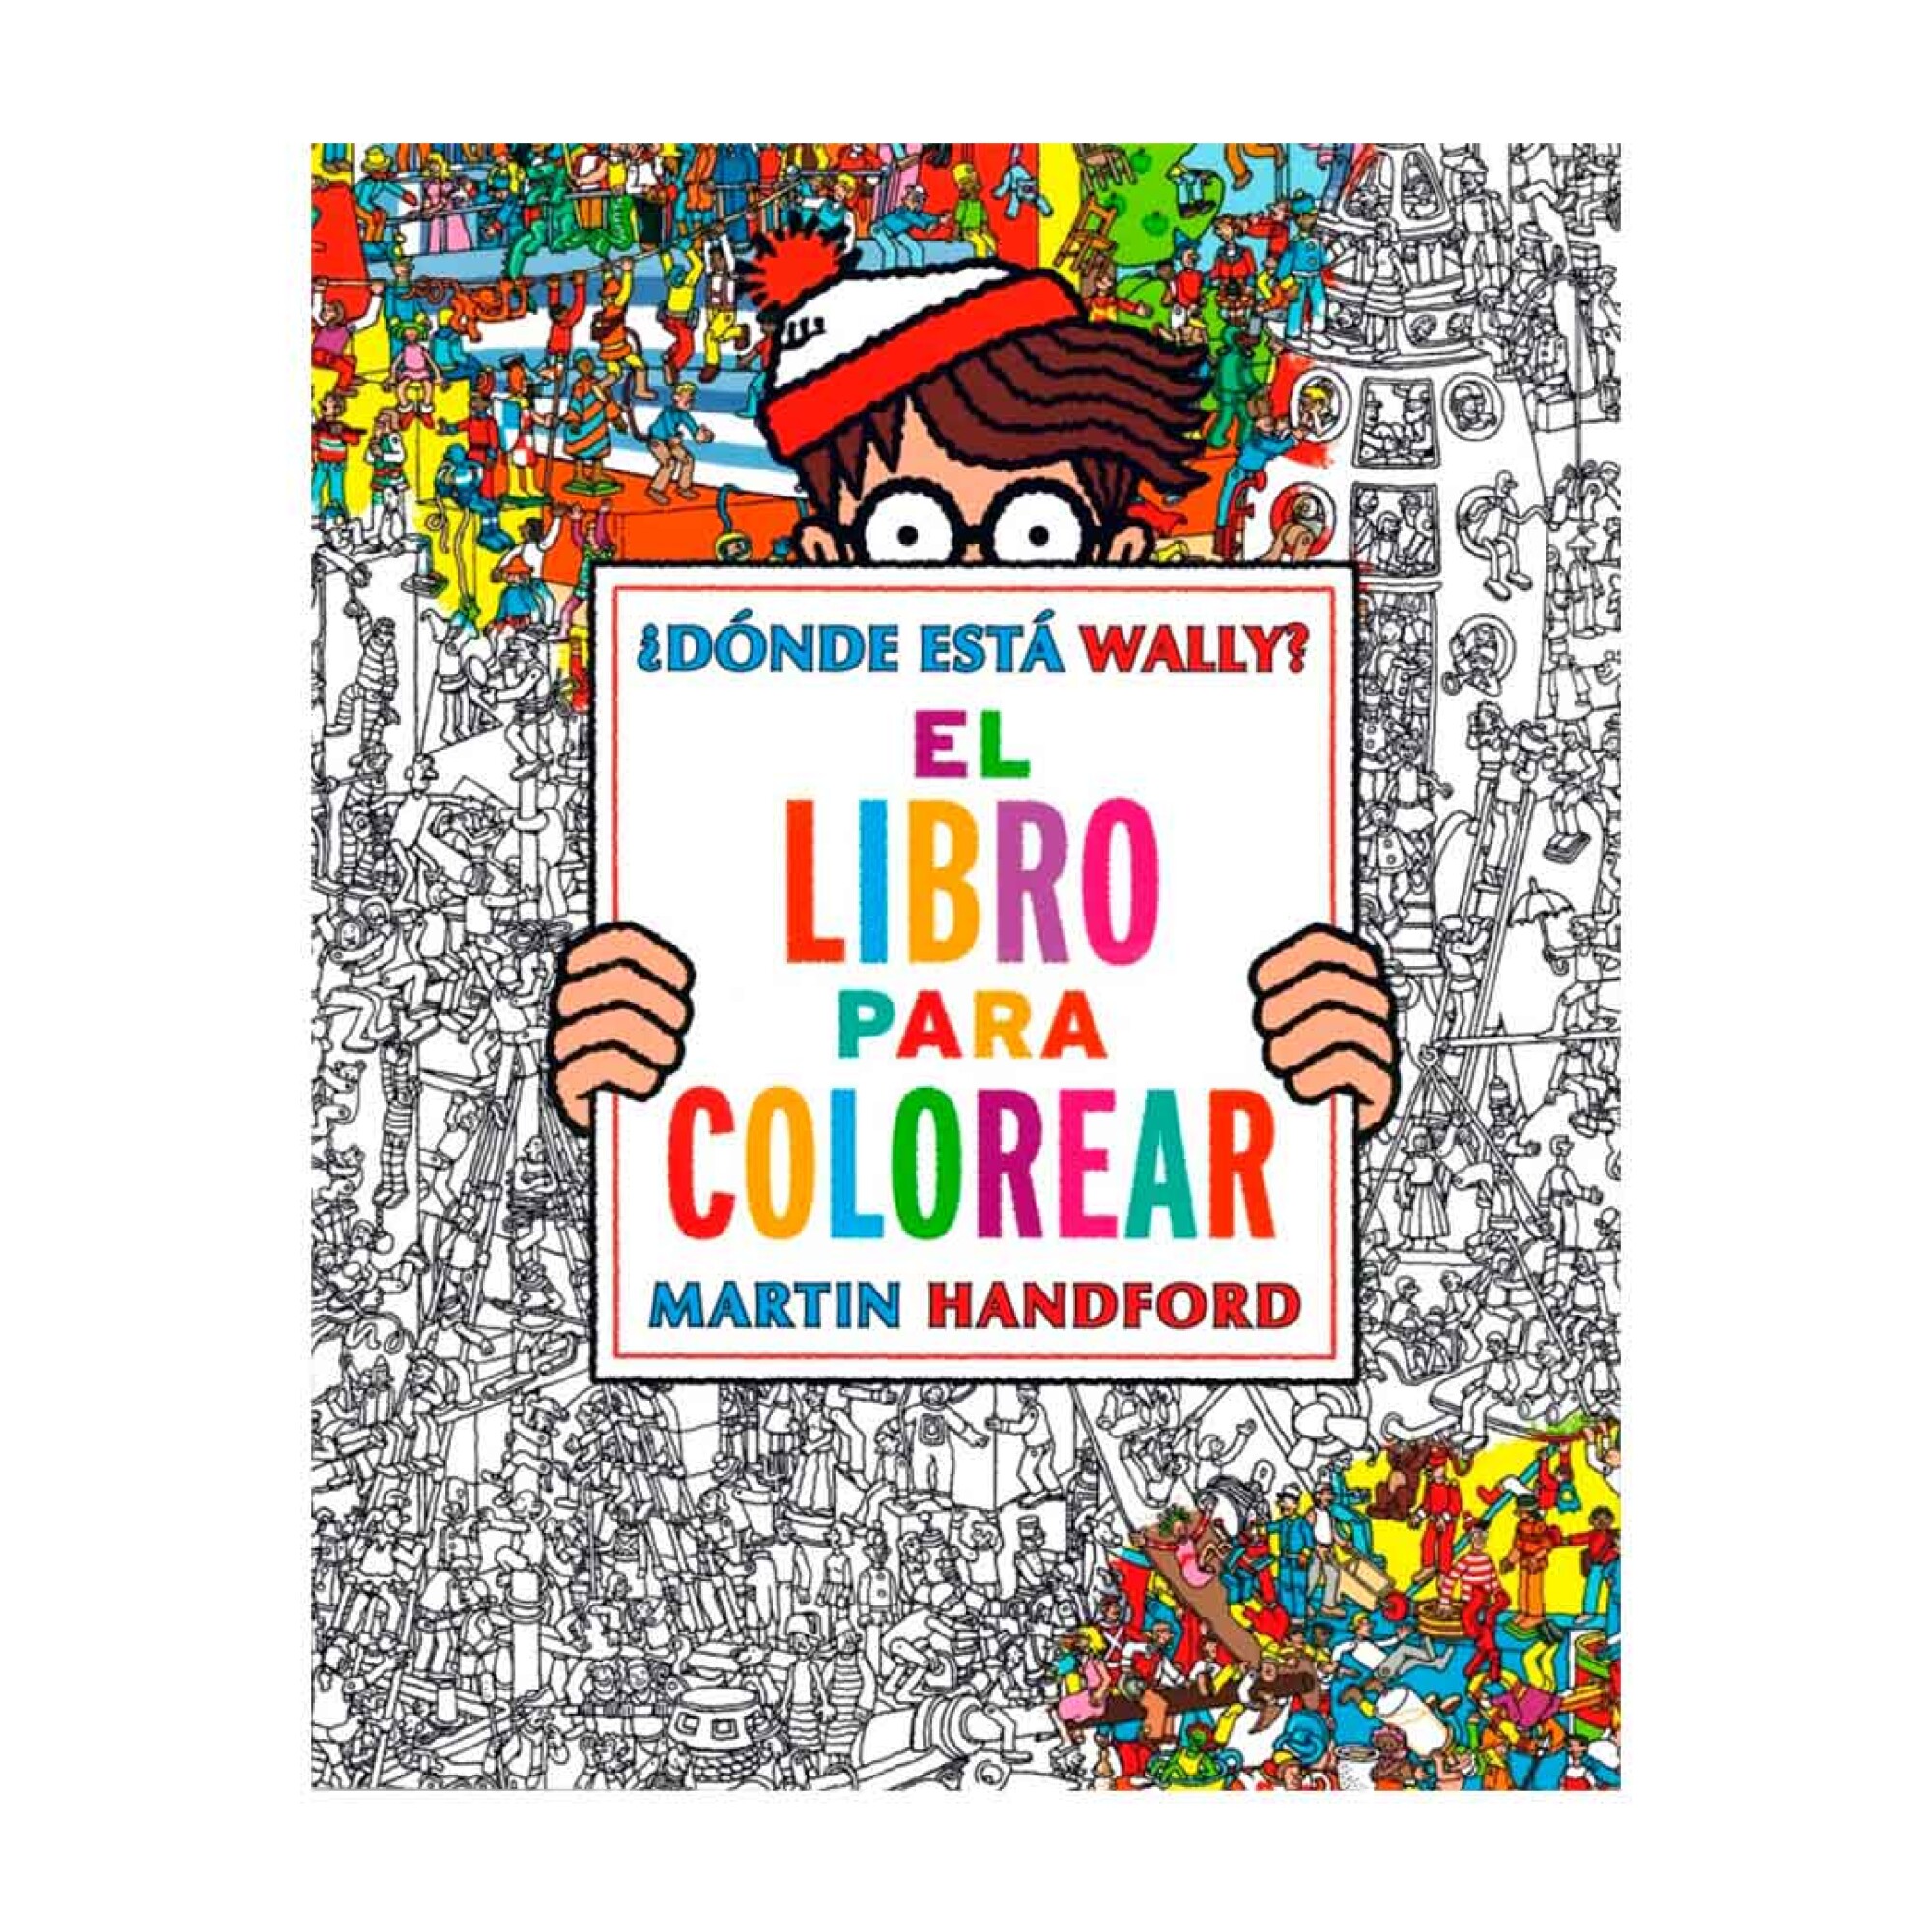 oler Qué Penetración Libro para colorear ¿Donde está Wally? by Martin Handford - 001 — Universo  Binario